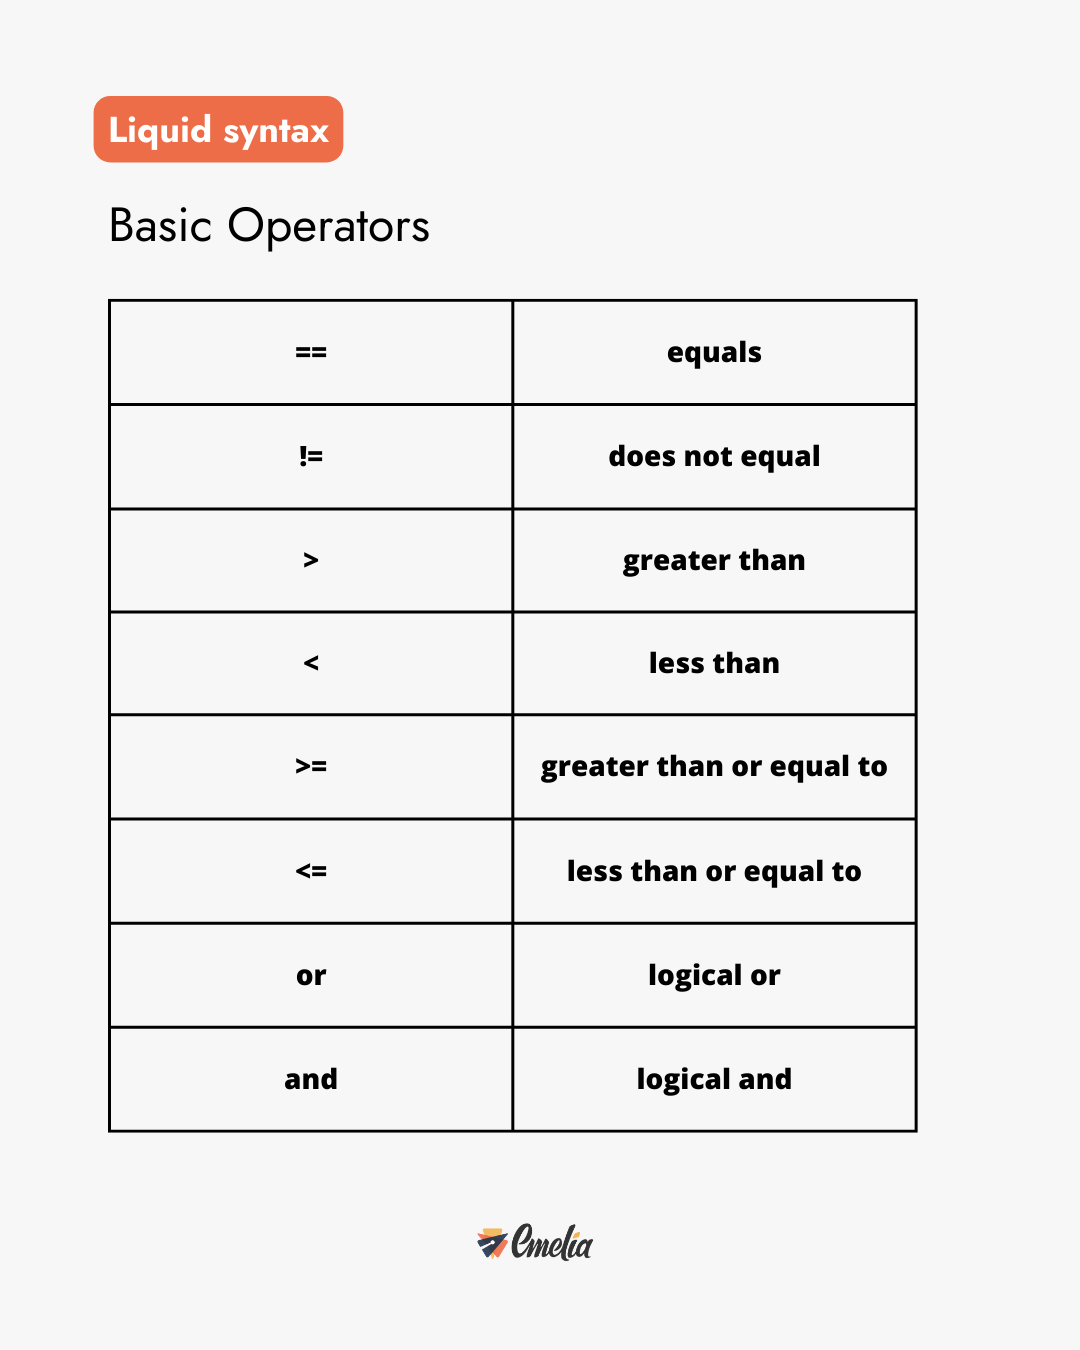 Liquid syntax basic operators